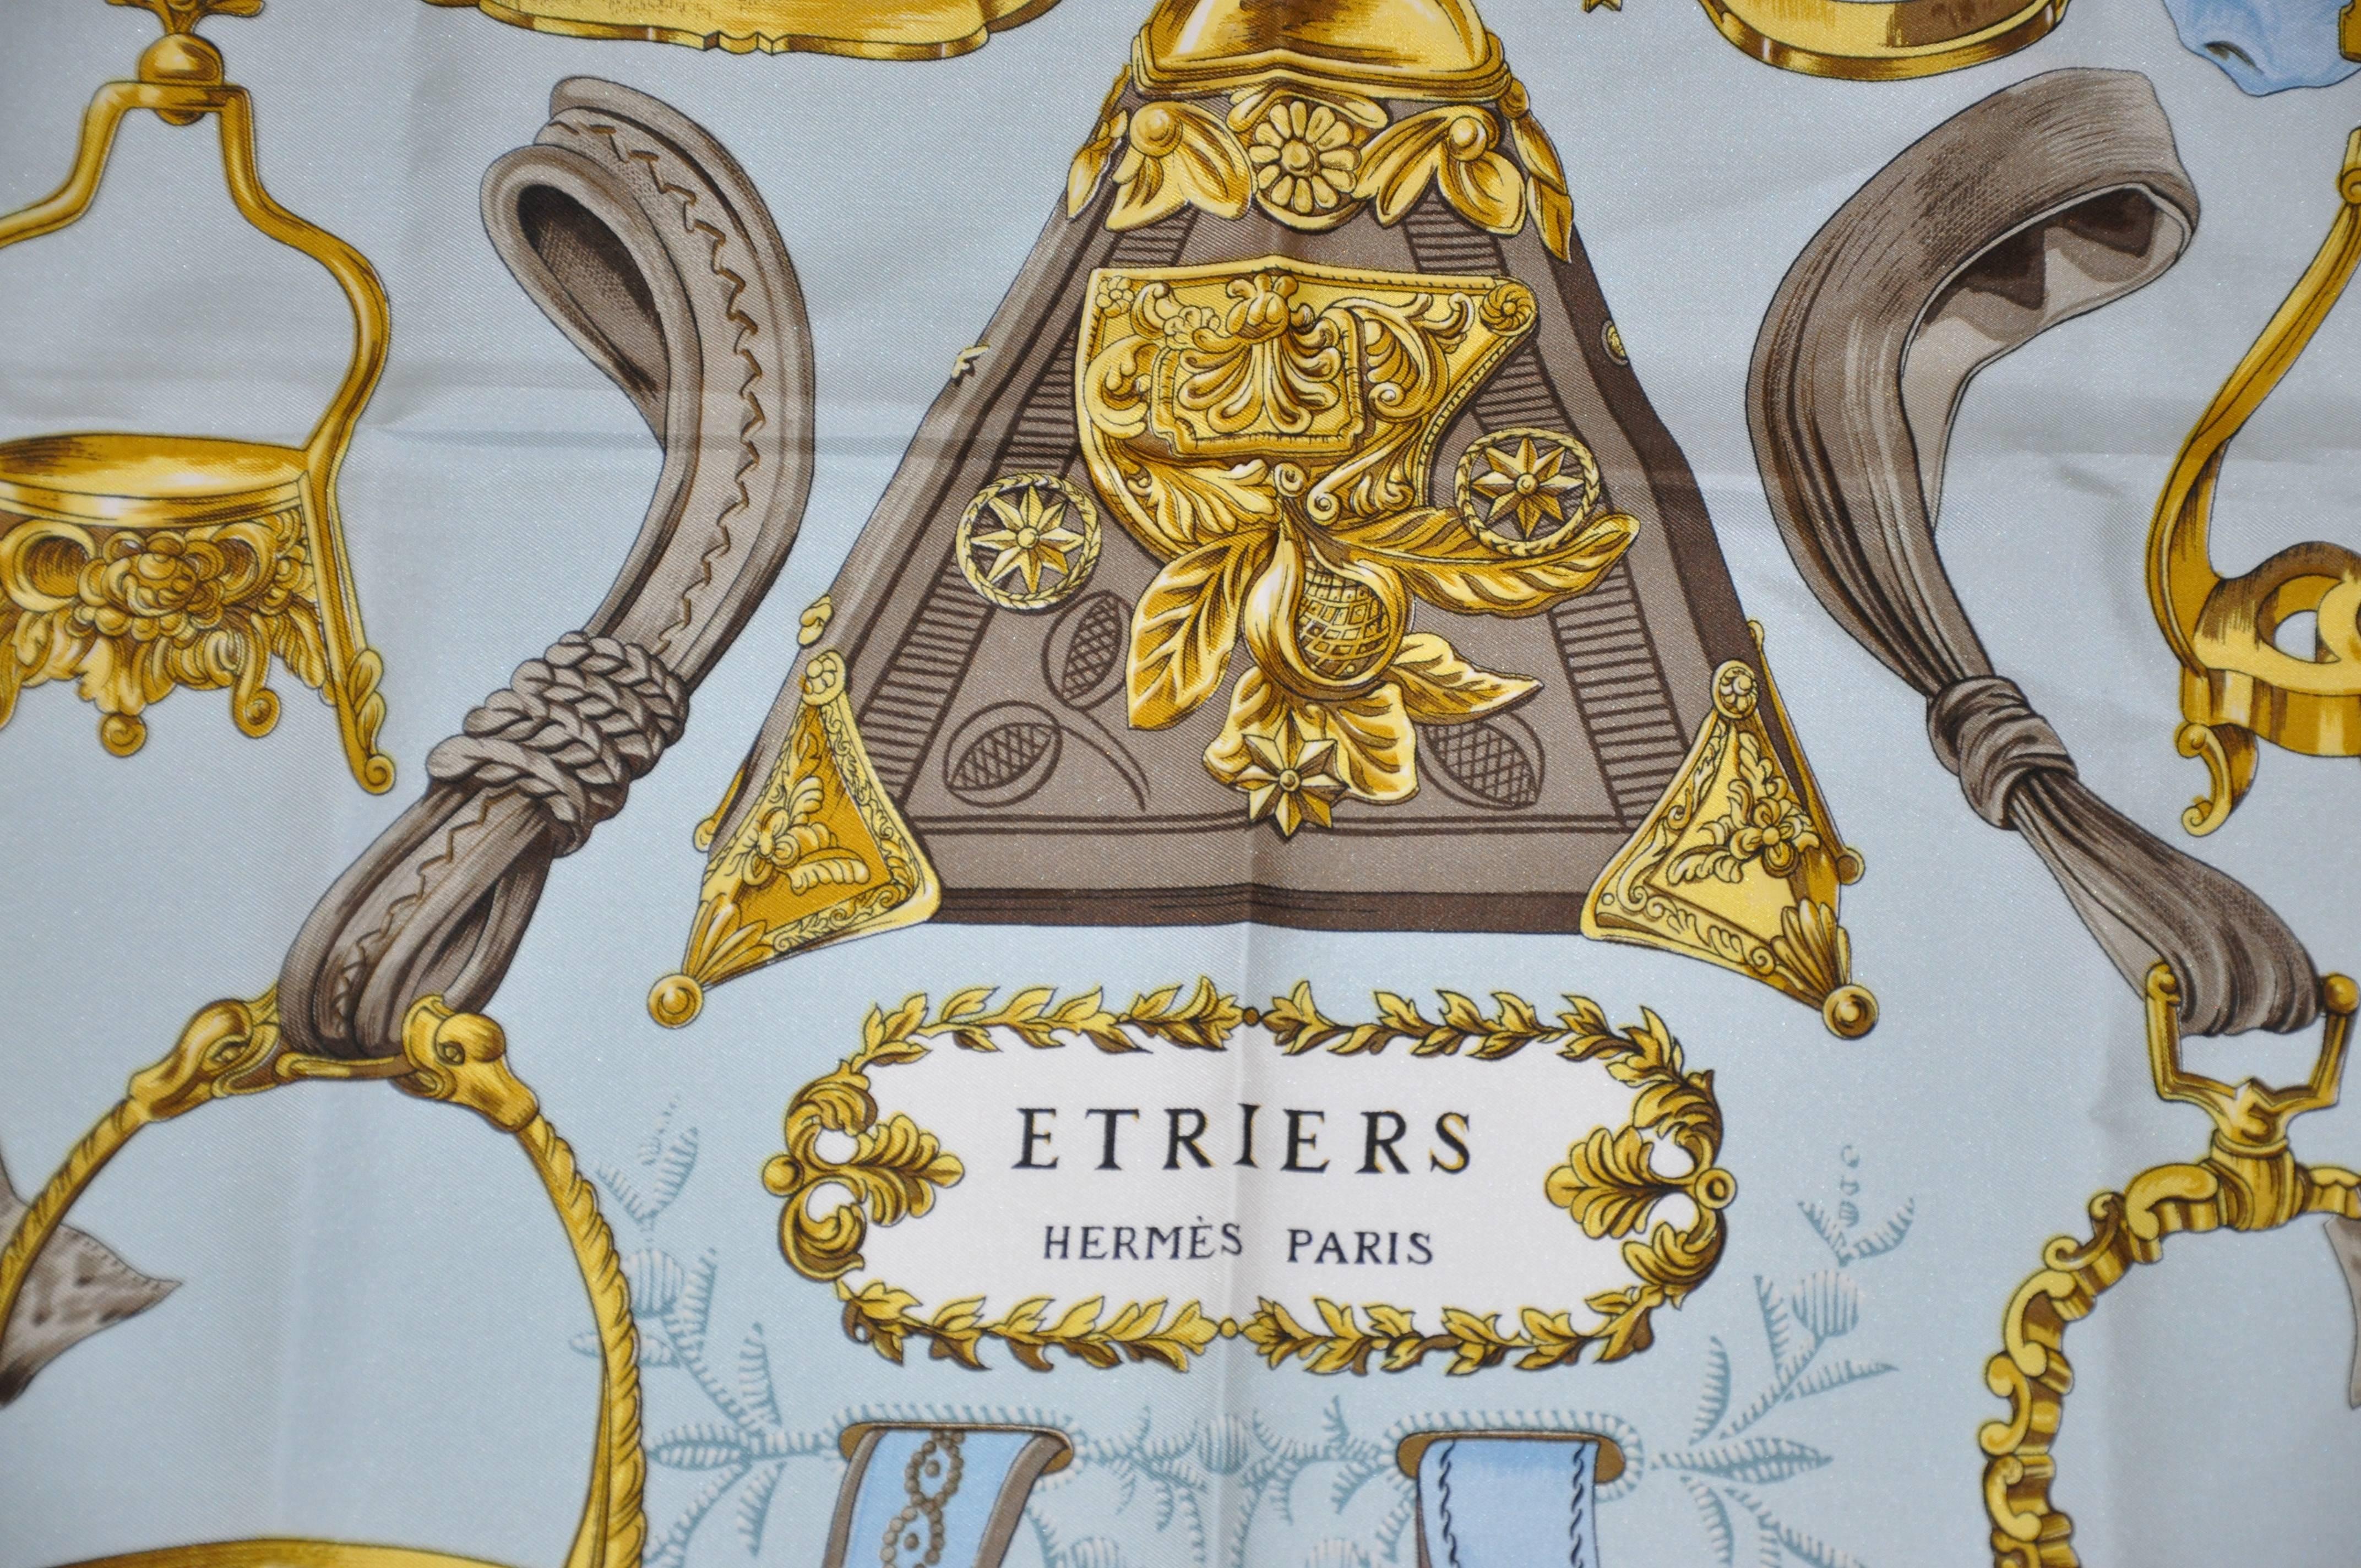        Hermes wonderfully detailed and elegant silk jacquard scarf designed by de la Perriere's 